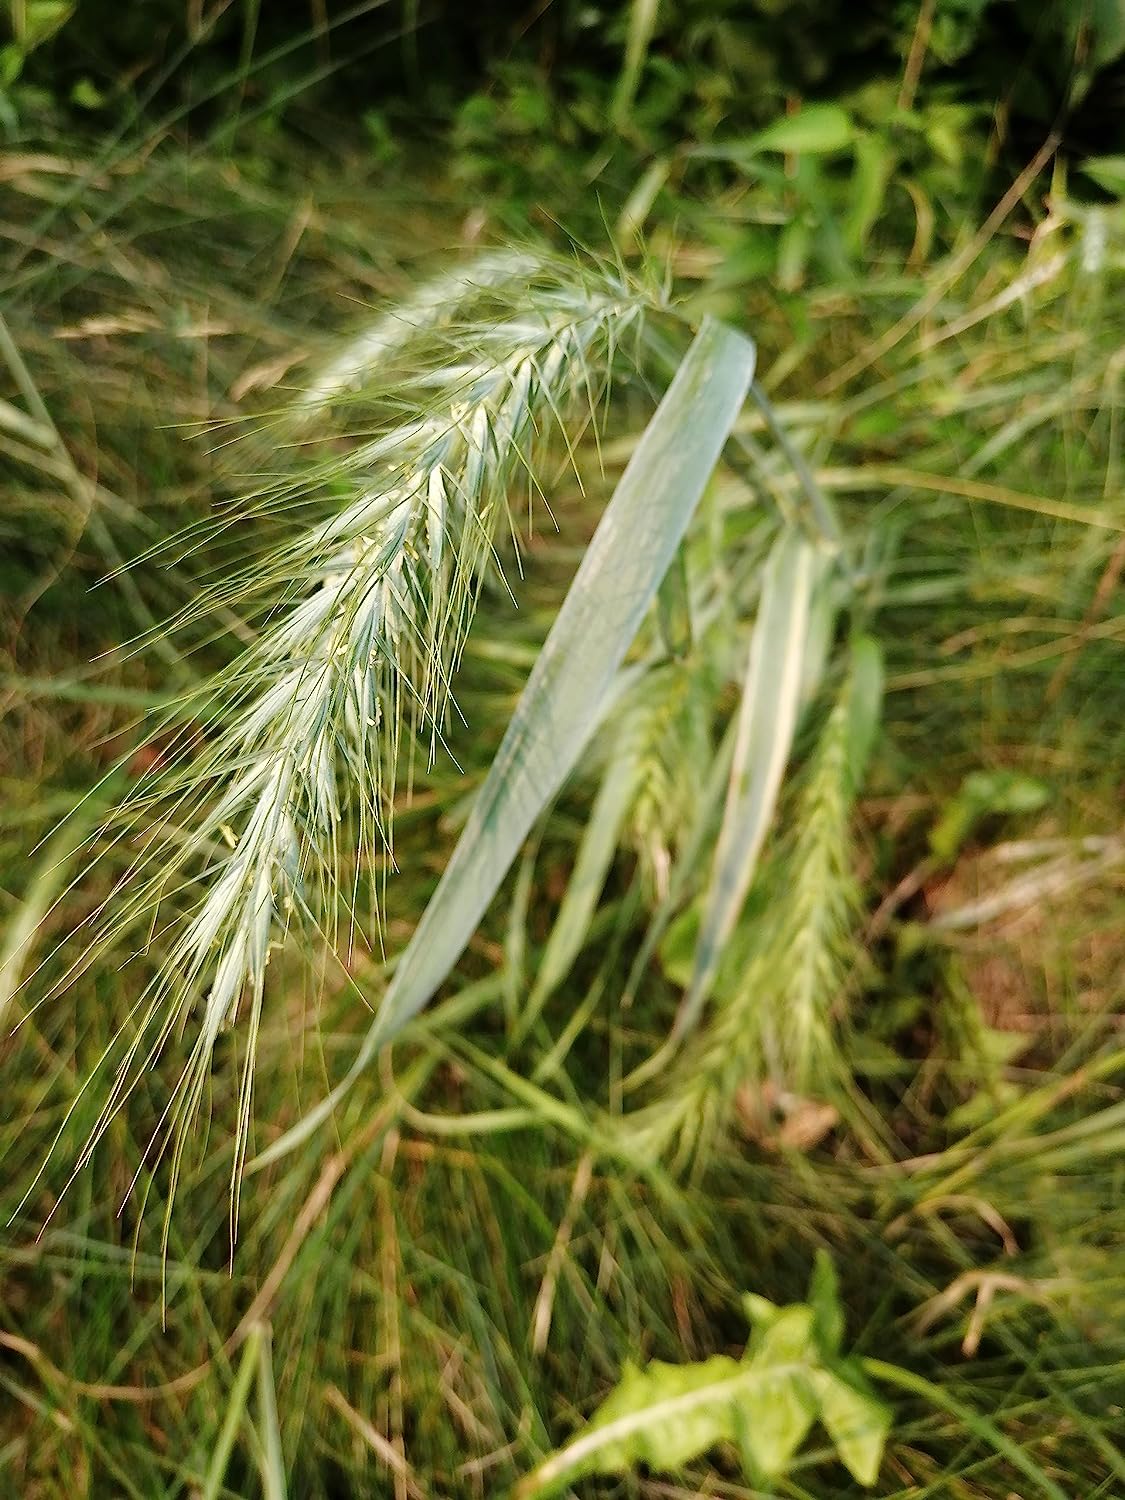 Hundredfold Canada Wild Rye Grass 200 Seeds - Elymus canadensis Ontario Native Prairie Wildrye, Nodding Wild Rye Perfect for Erosion Control or Ornamental Grass